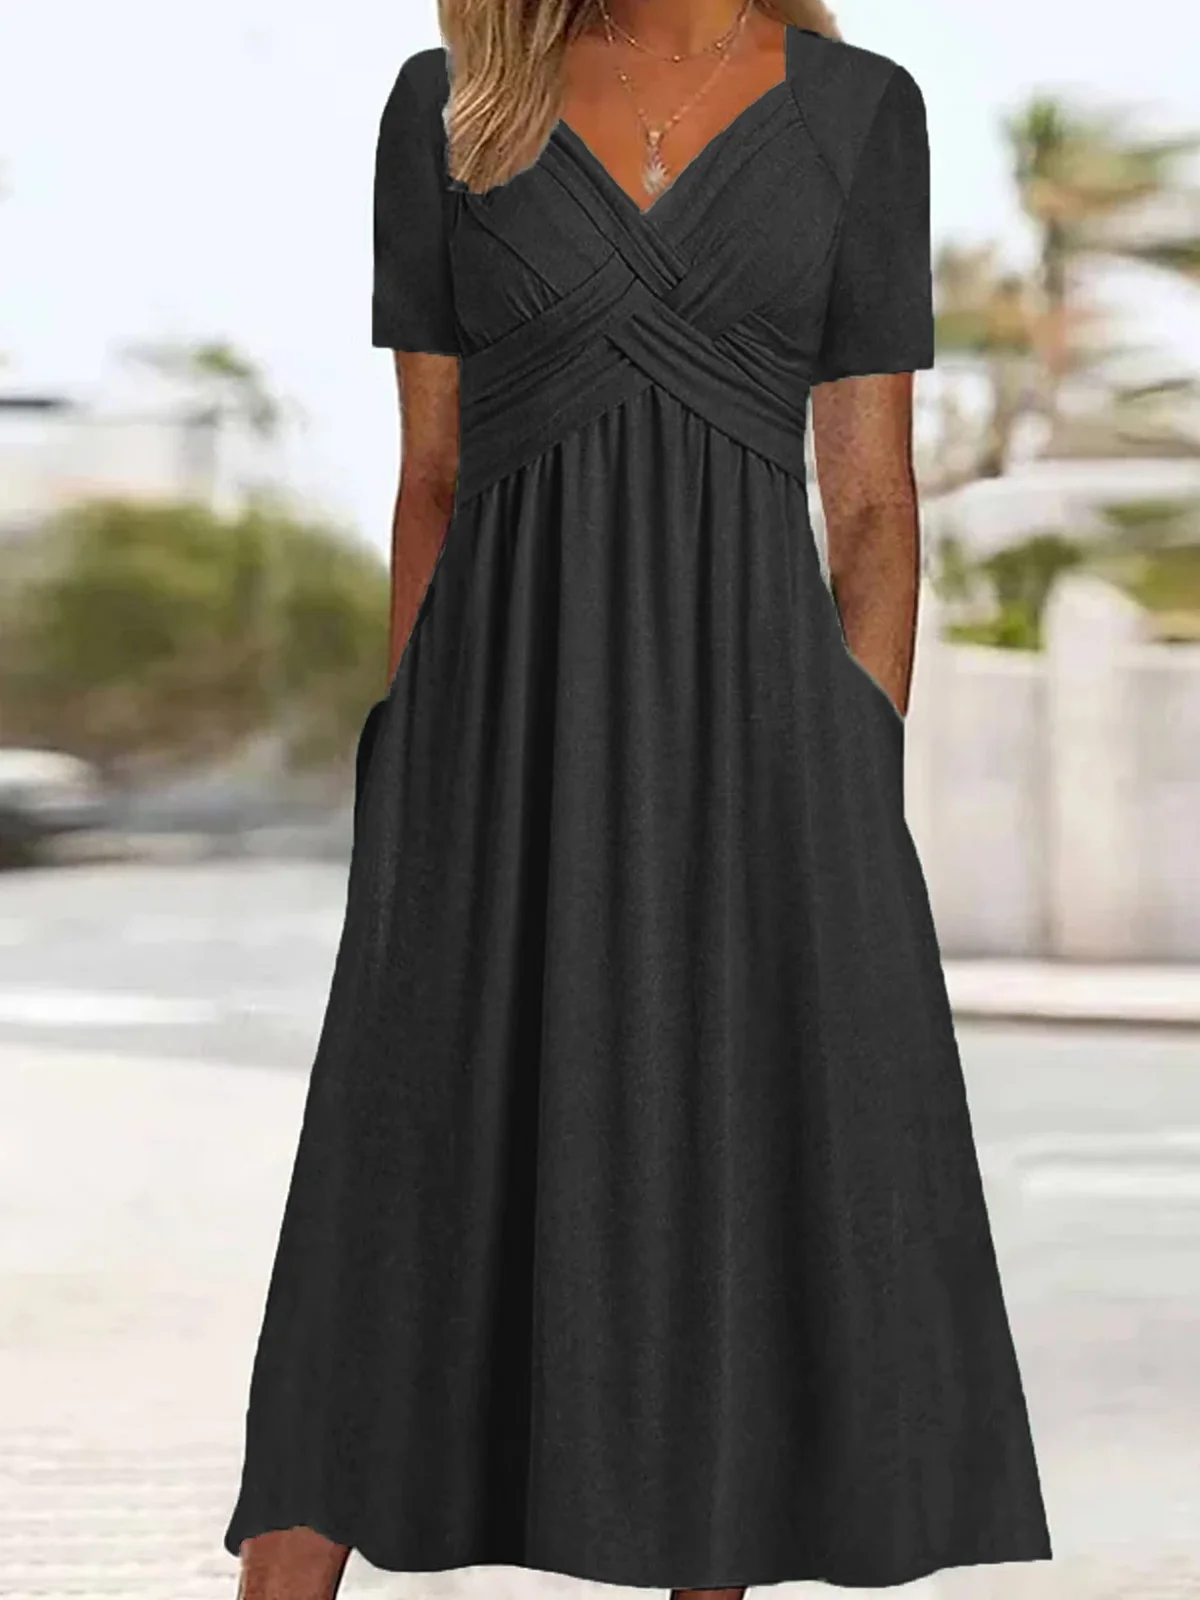 Plain Sweetheart Neckline Regular Fit Short Sleeve Casual Maxi Dress